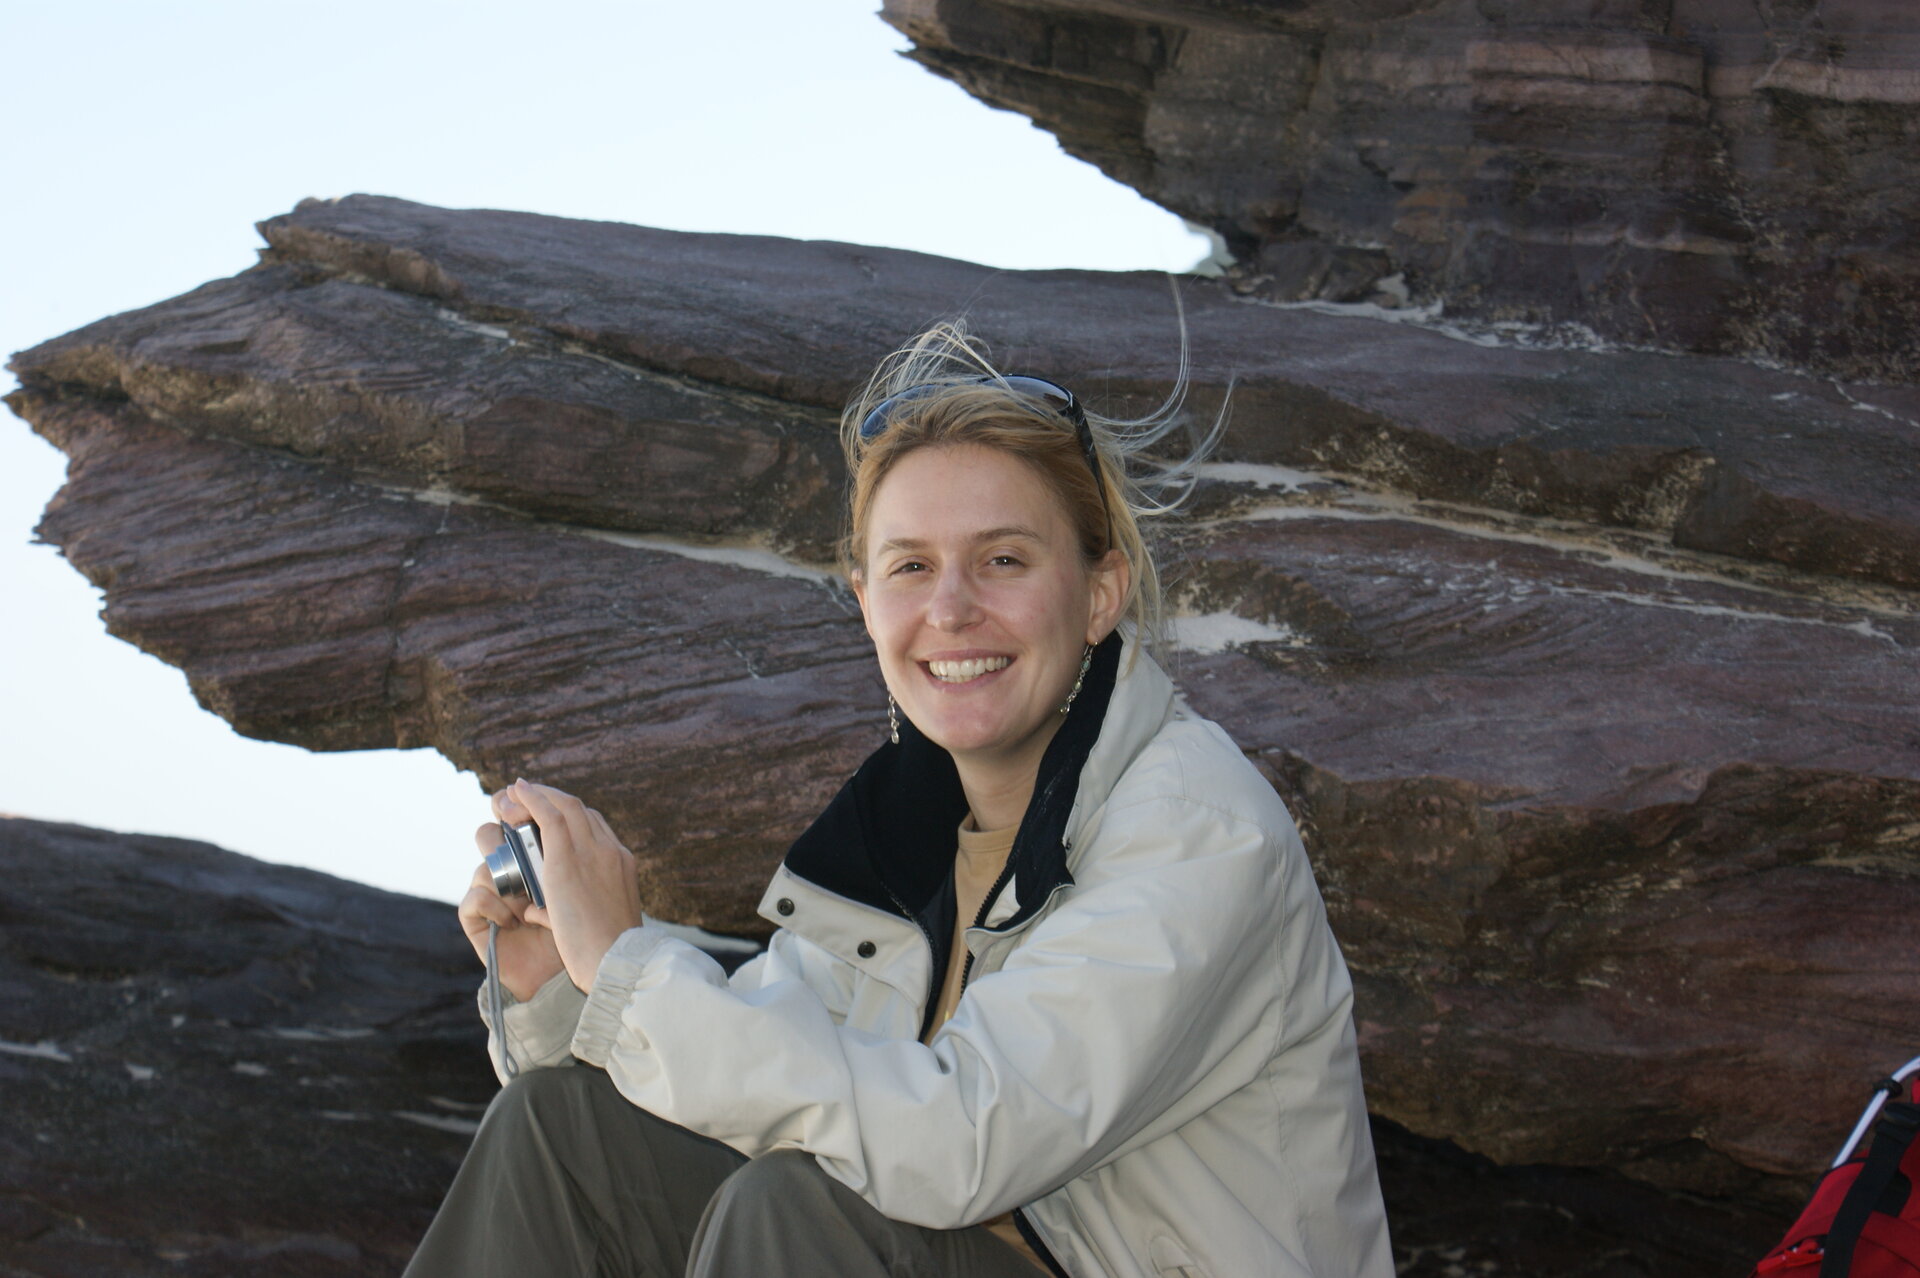 Vinciane Debaille in her natural habitat – surrounded by rocks.